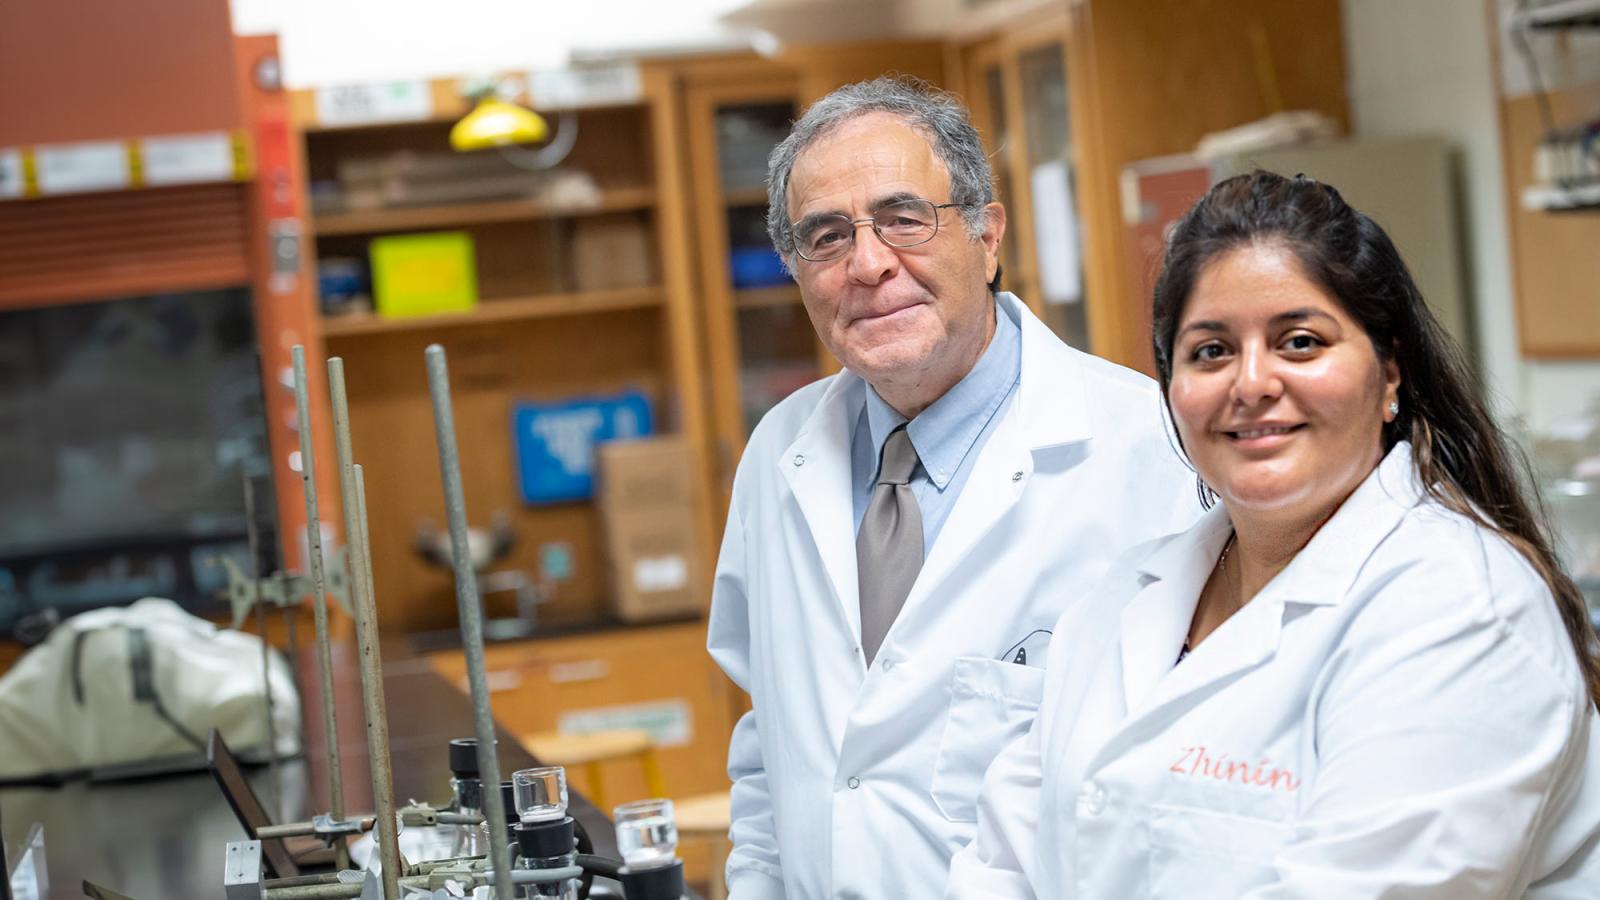 Pace University's Pleasantville Chemistry lab student smiling with professor David Nabirahni